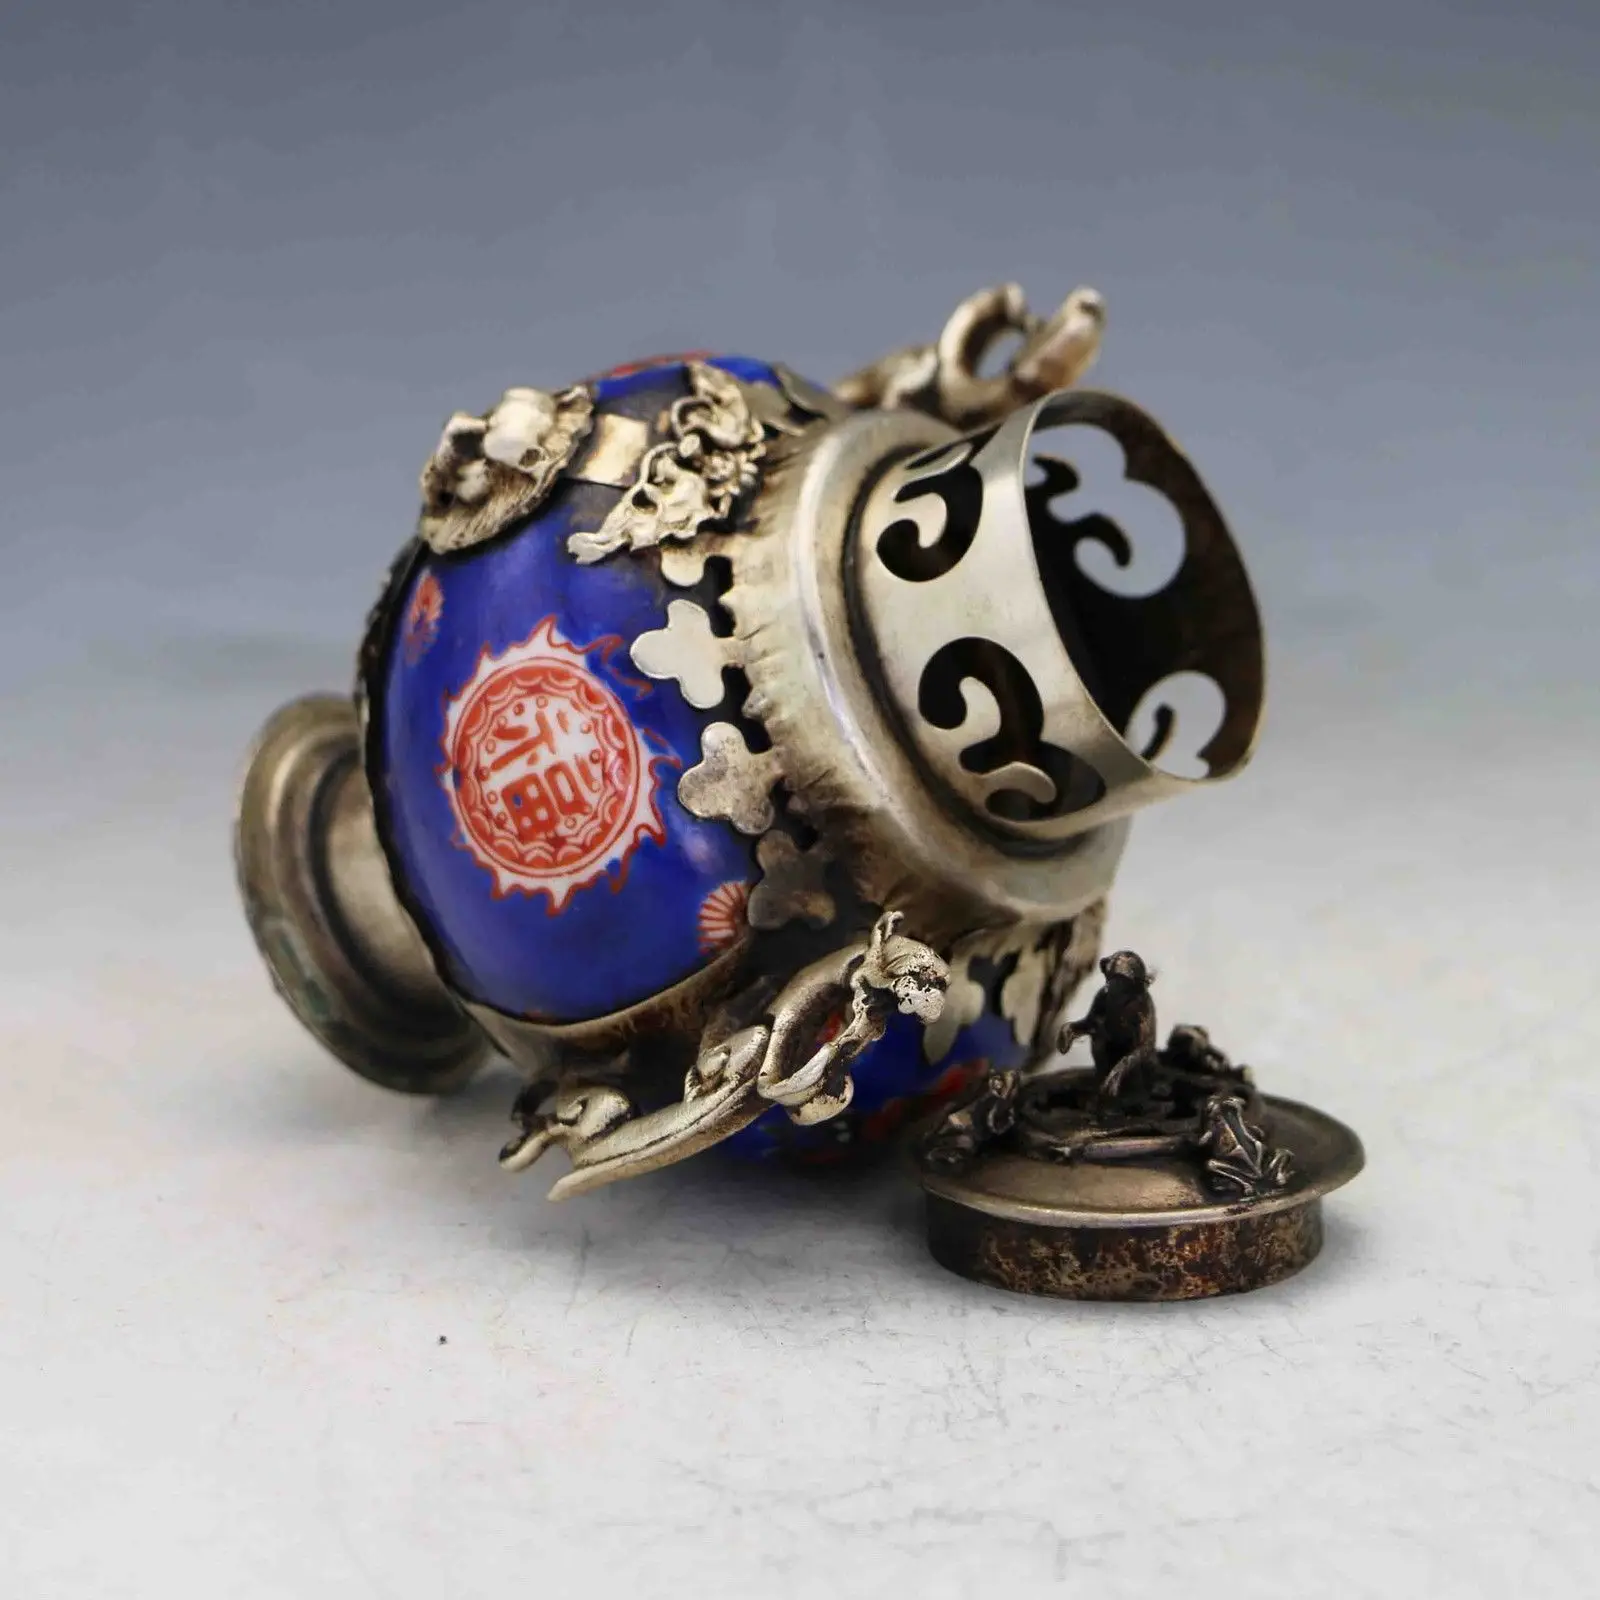 Details about   Chinese Antique Porcelain Inlaid Tibetan Silver&Monkey Lid Incense Burner 